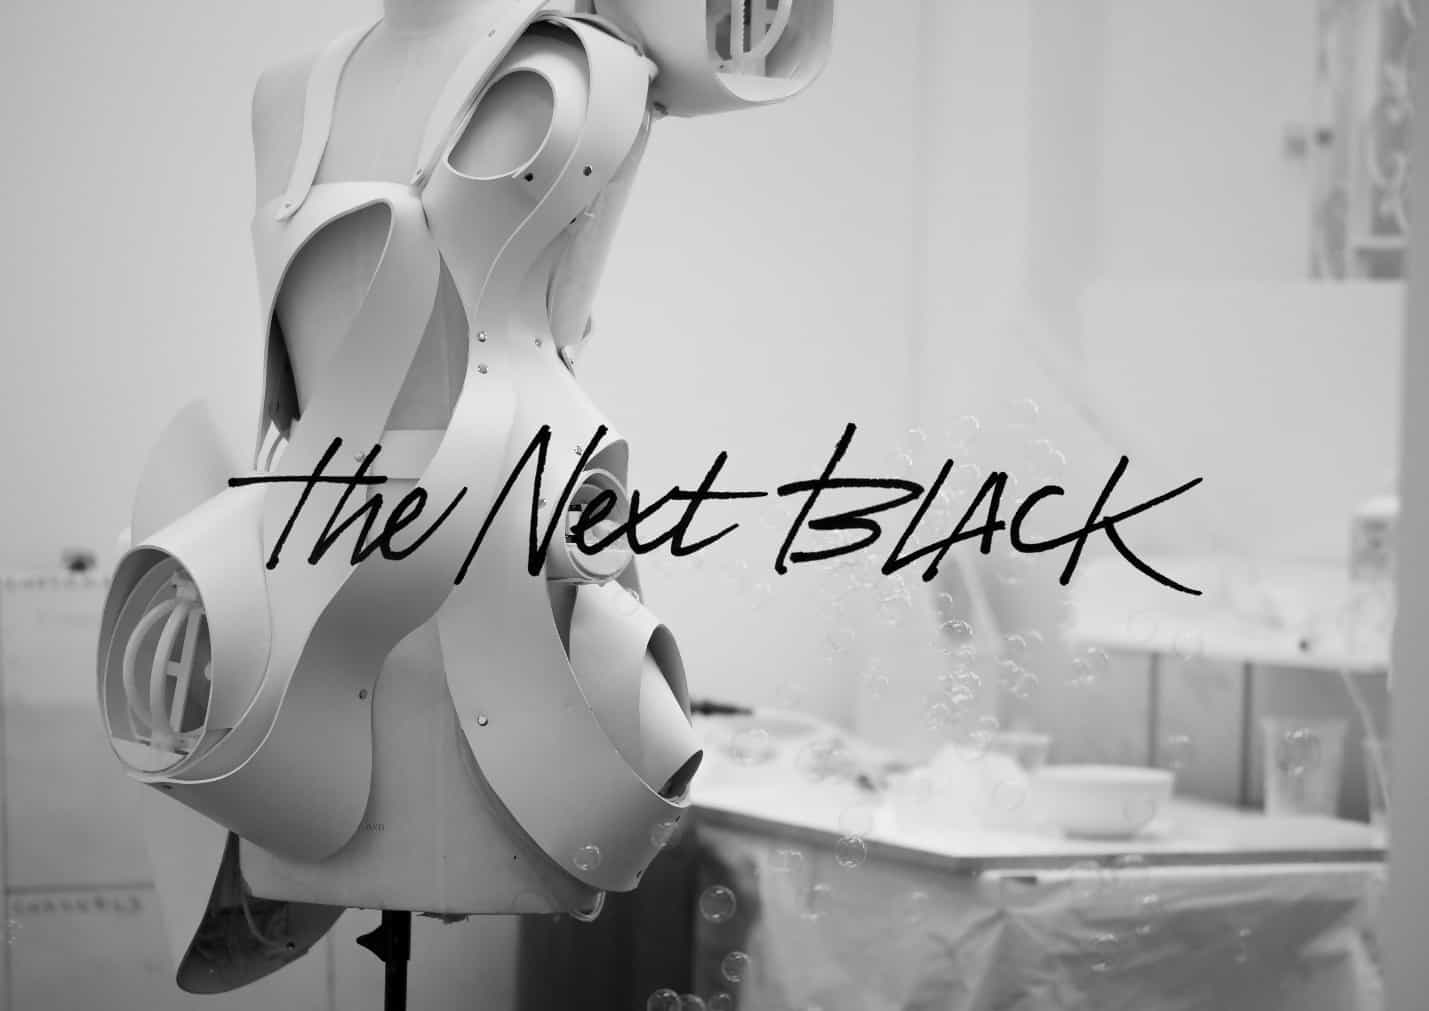 The Next Black